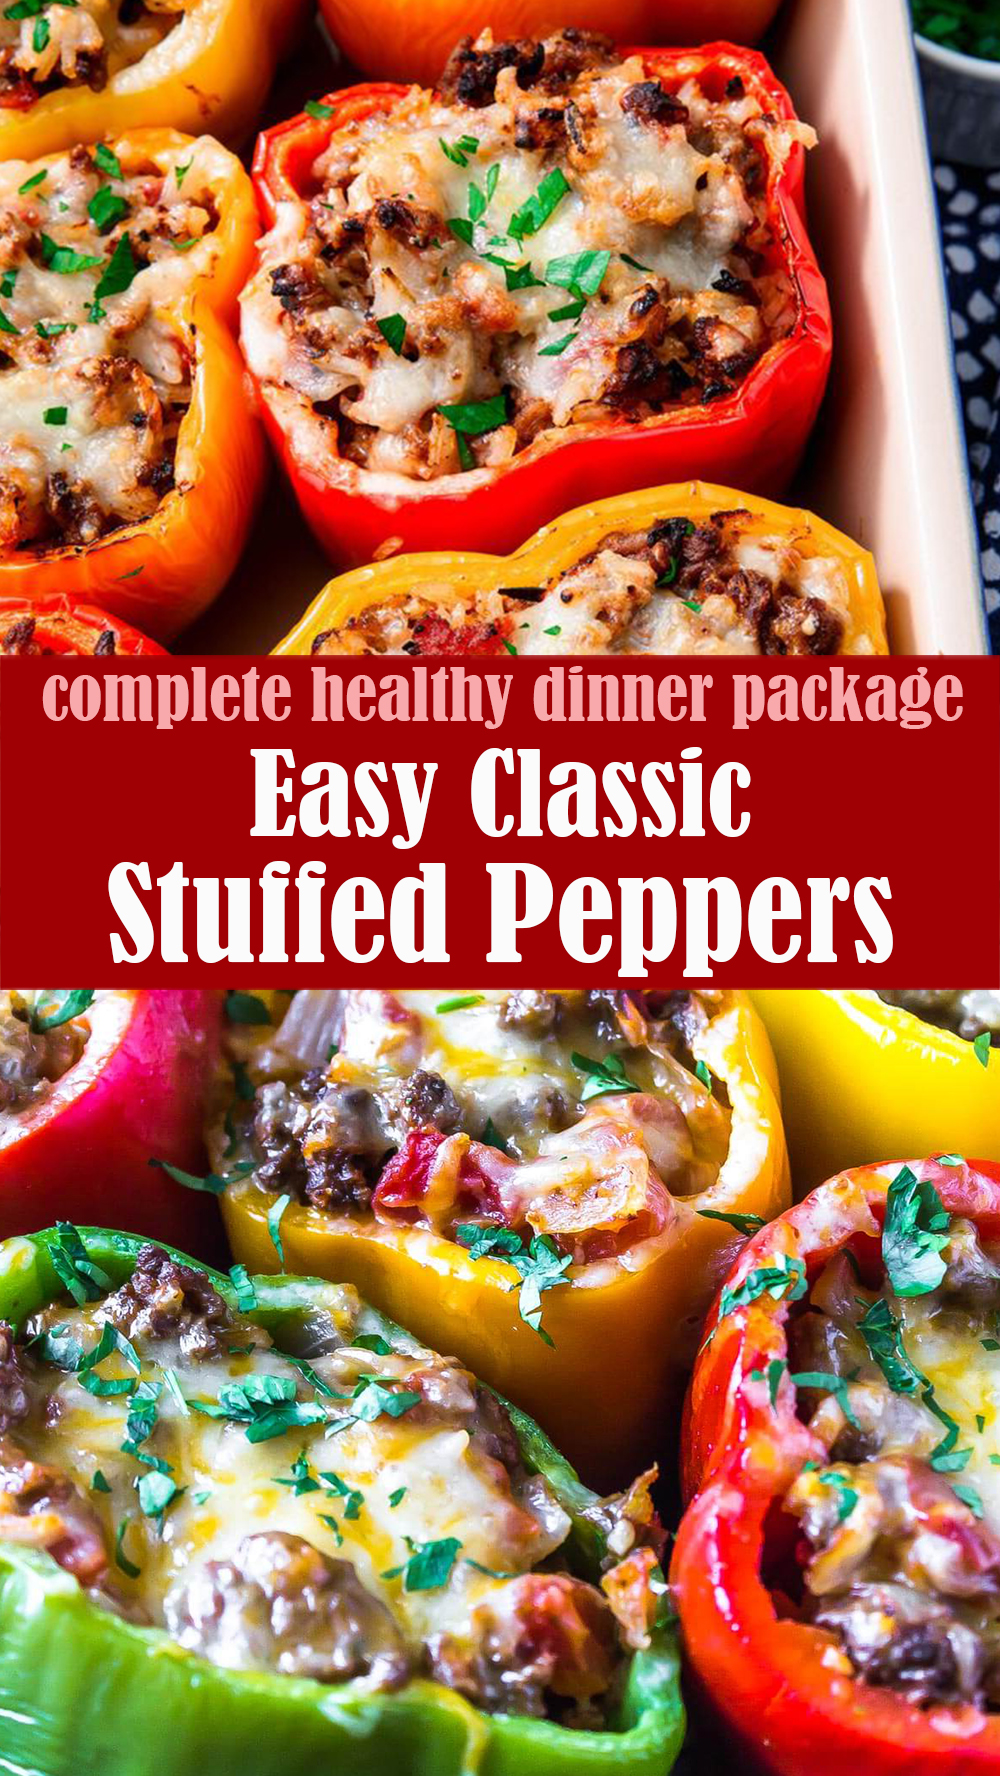 Easy Classic Stuffed Peppers